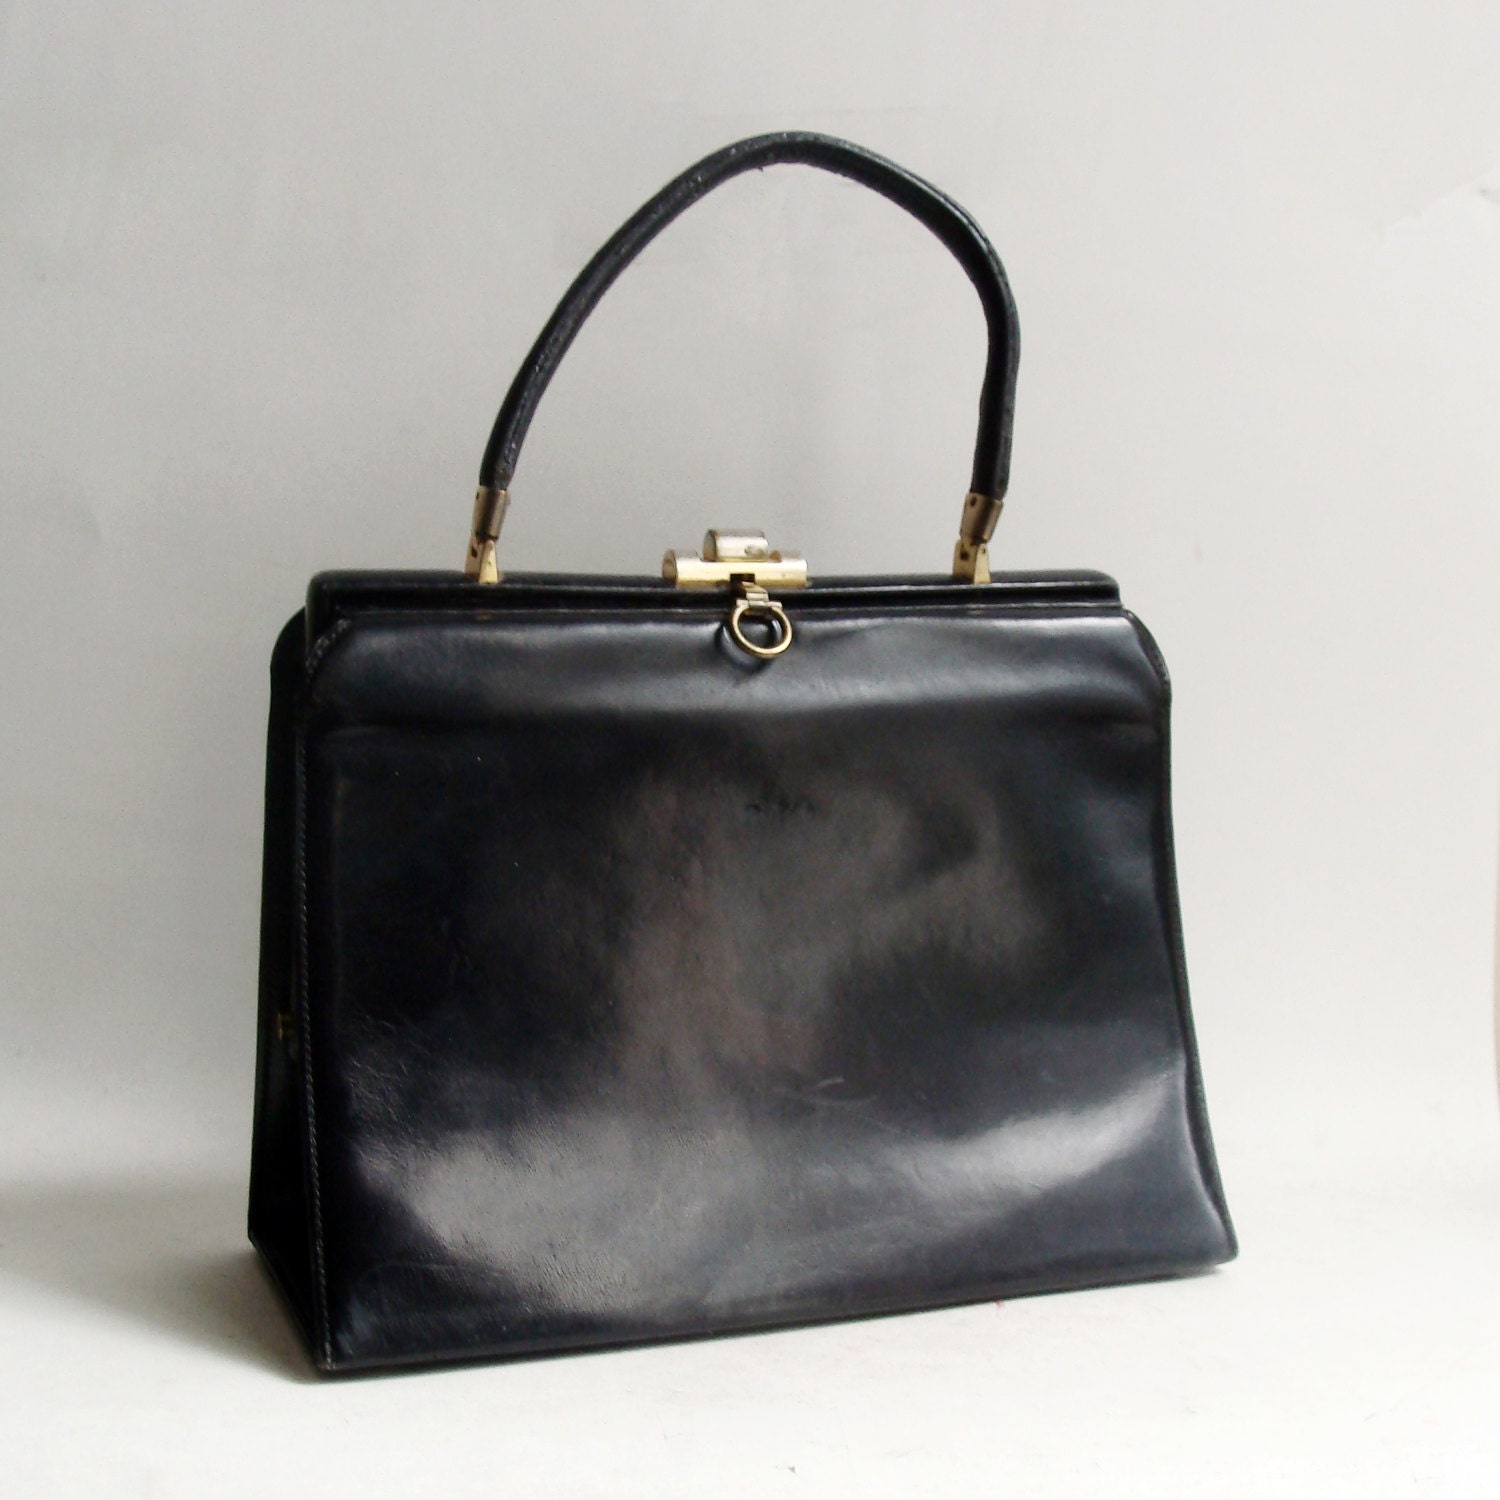 Gucci purse / vintage 1960s Gucci handbag / black leather